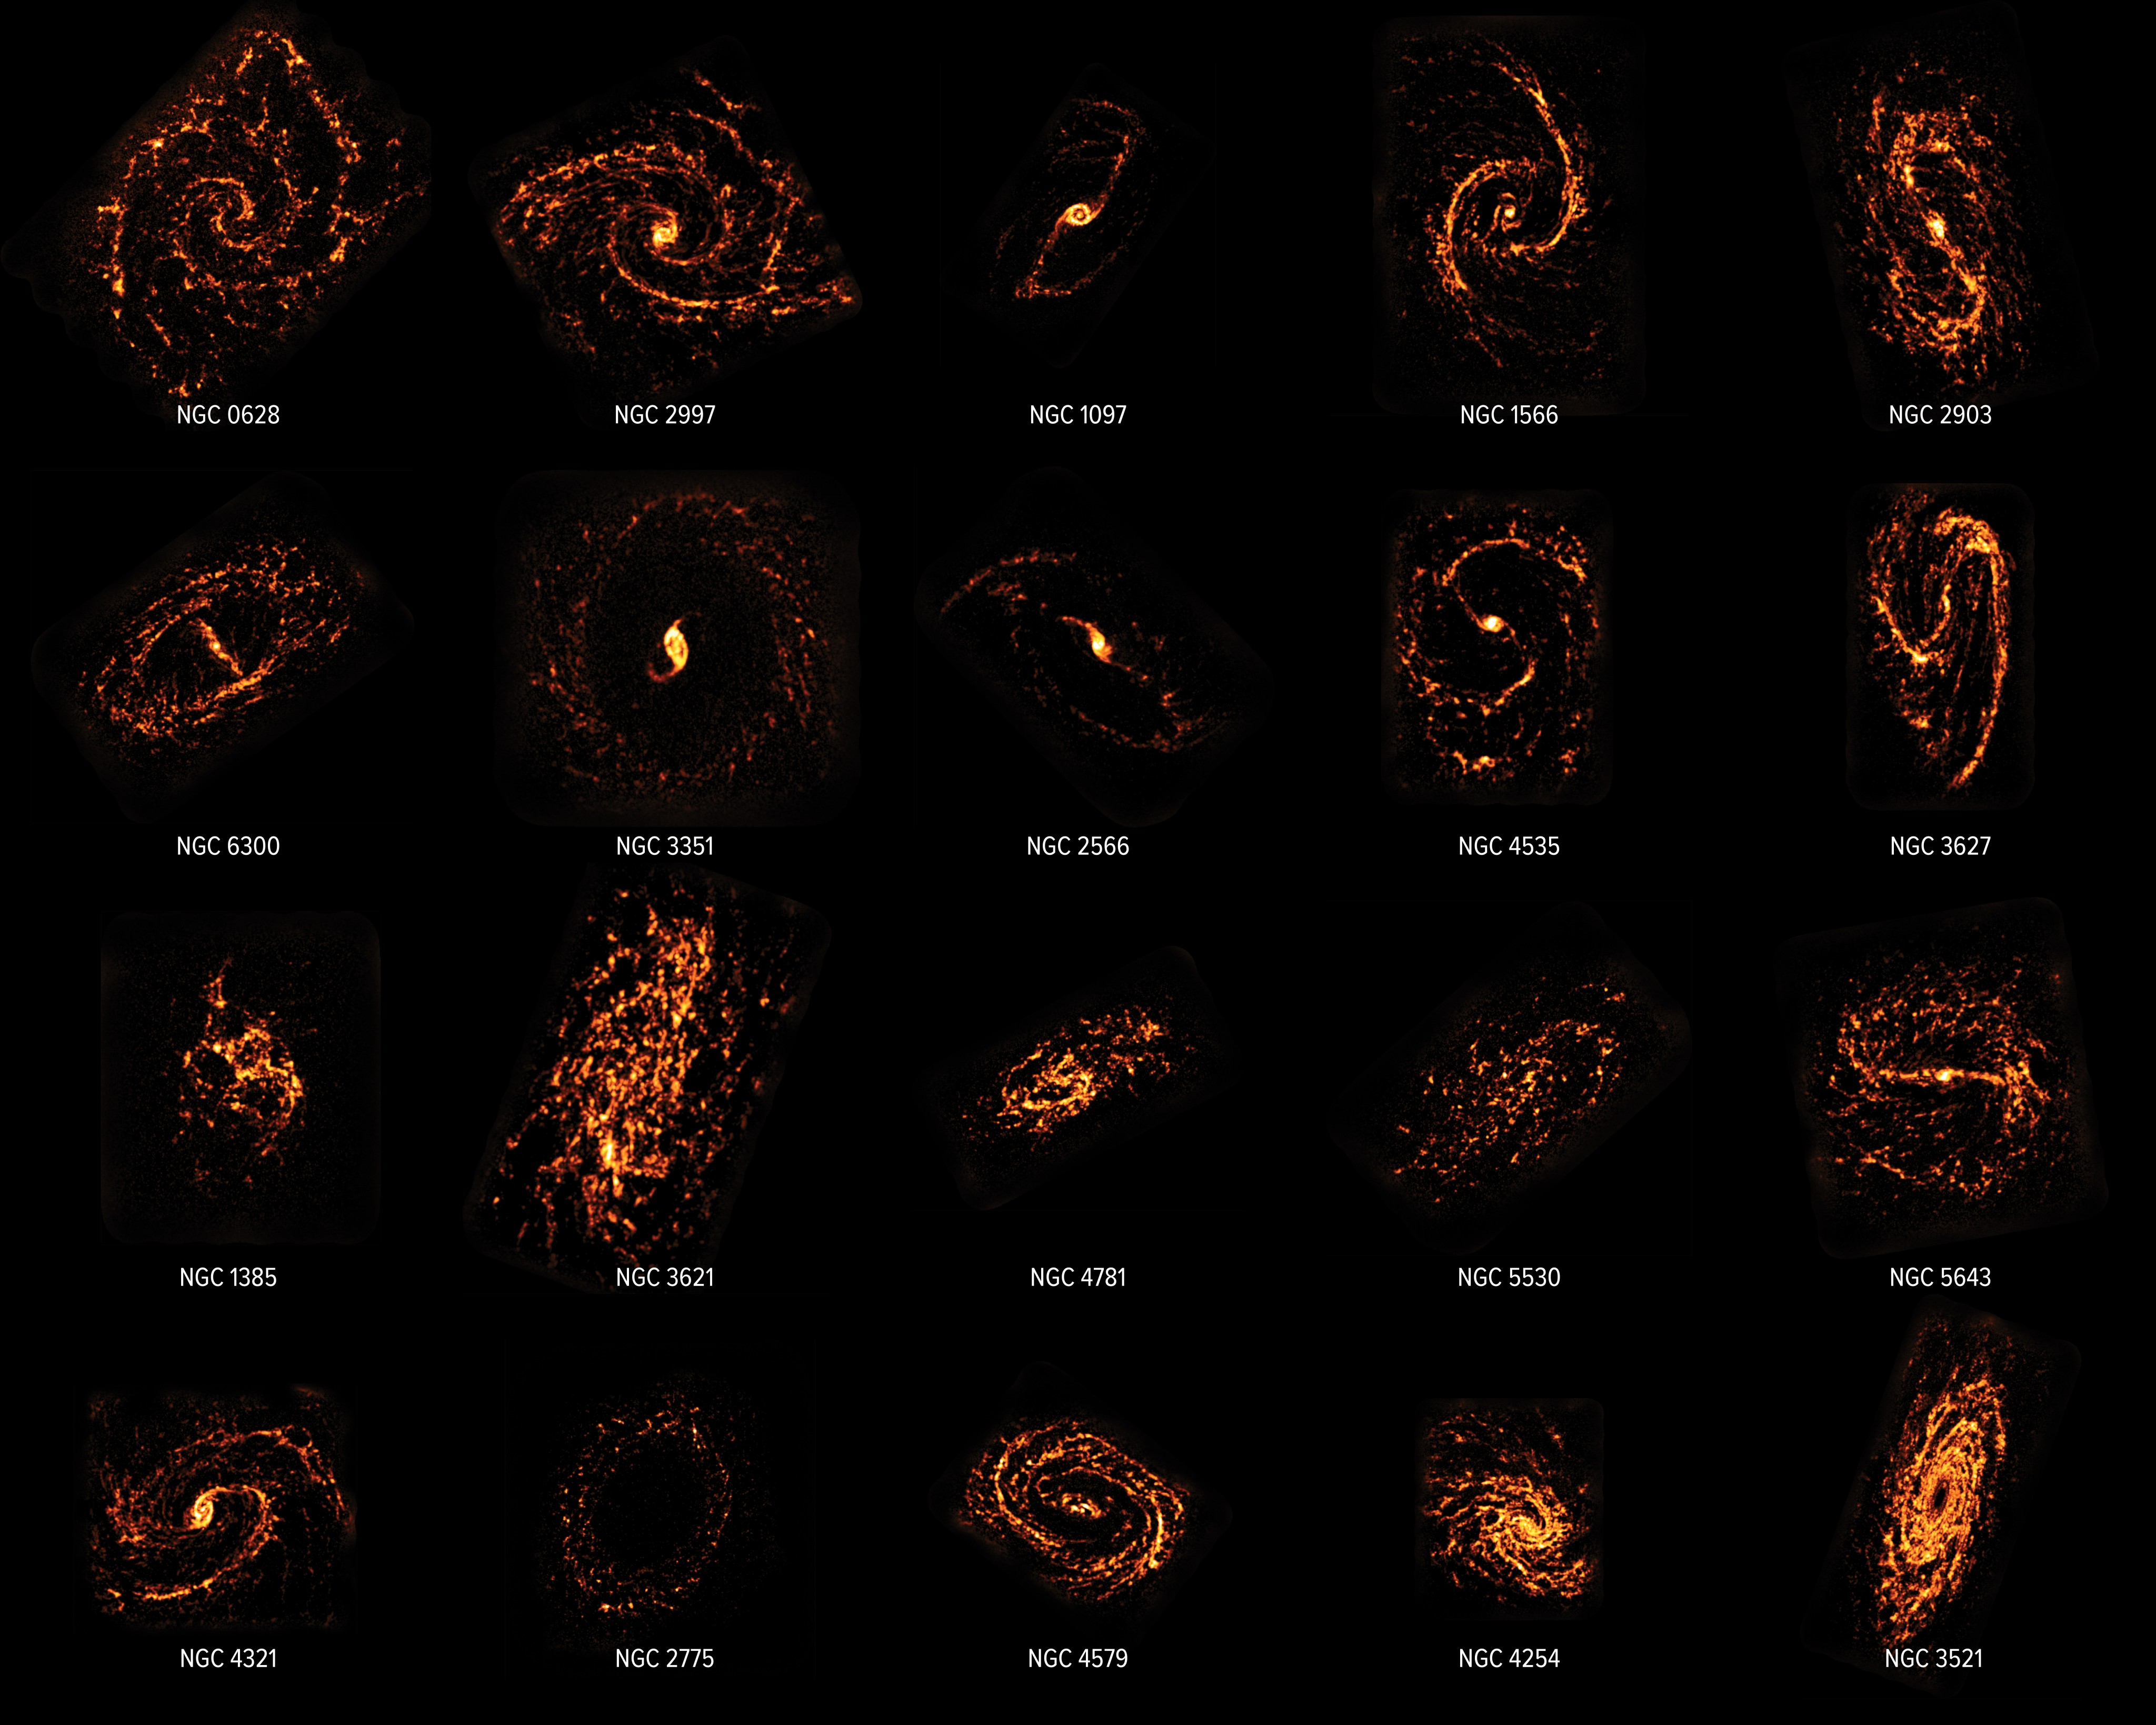 Radio wavelength images of galaxies